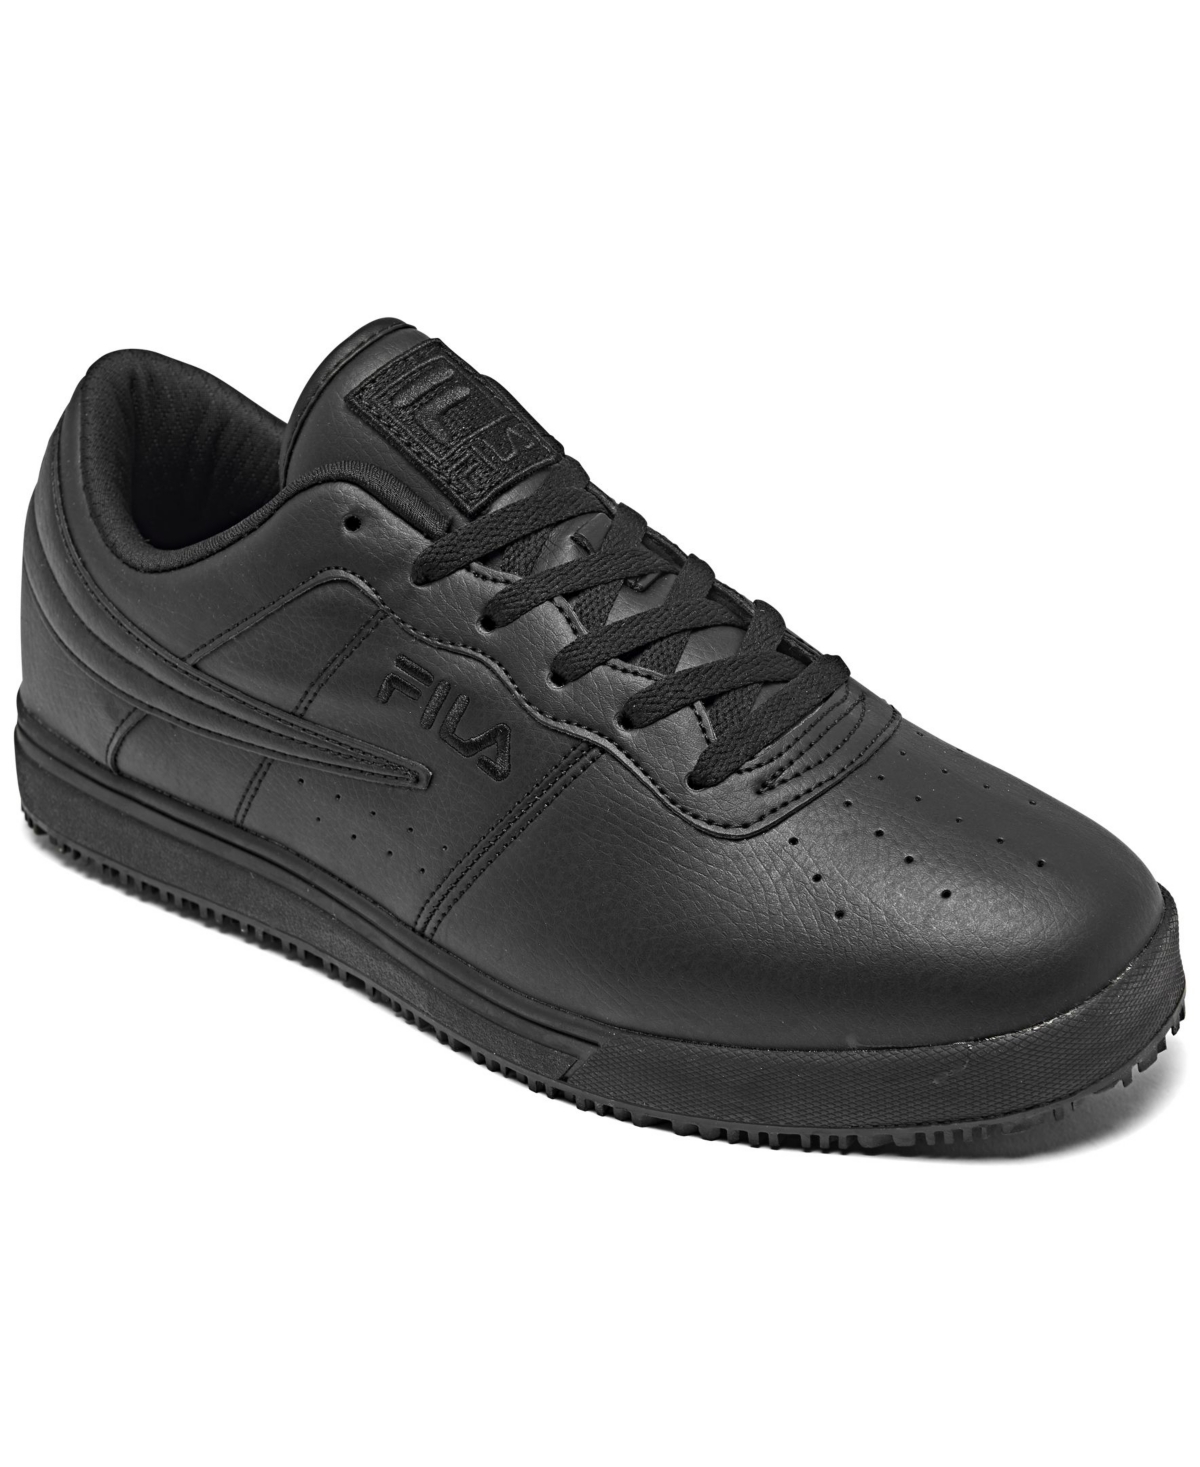 Men's Vulc 13 Low Slip-Resistant Work Sneakers from Finish Line - Black